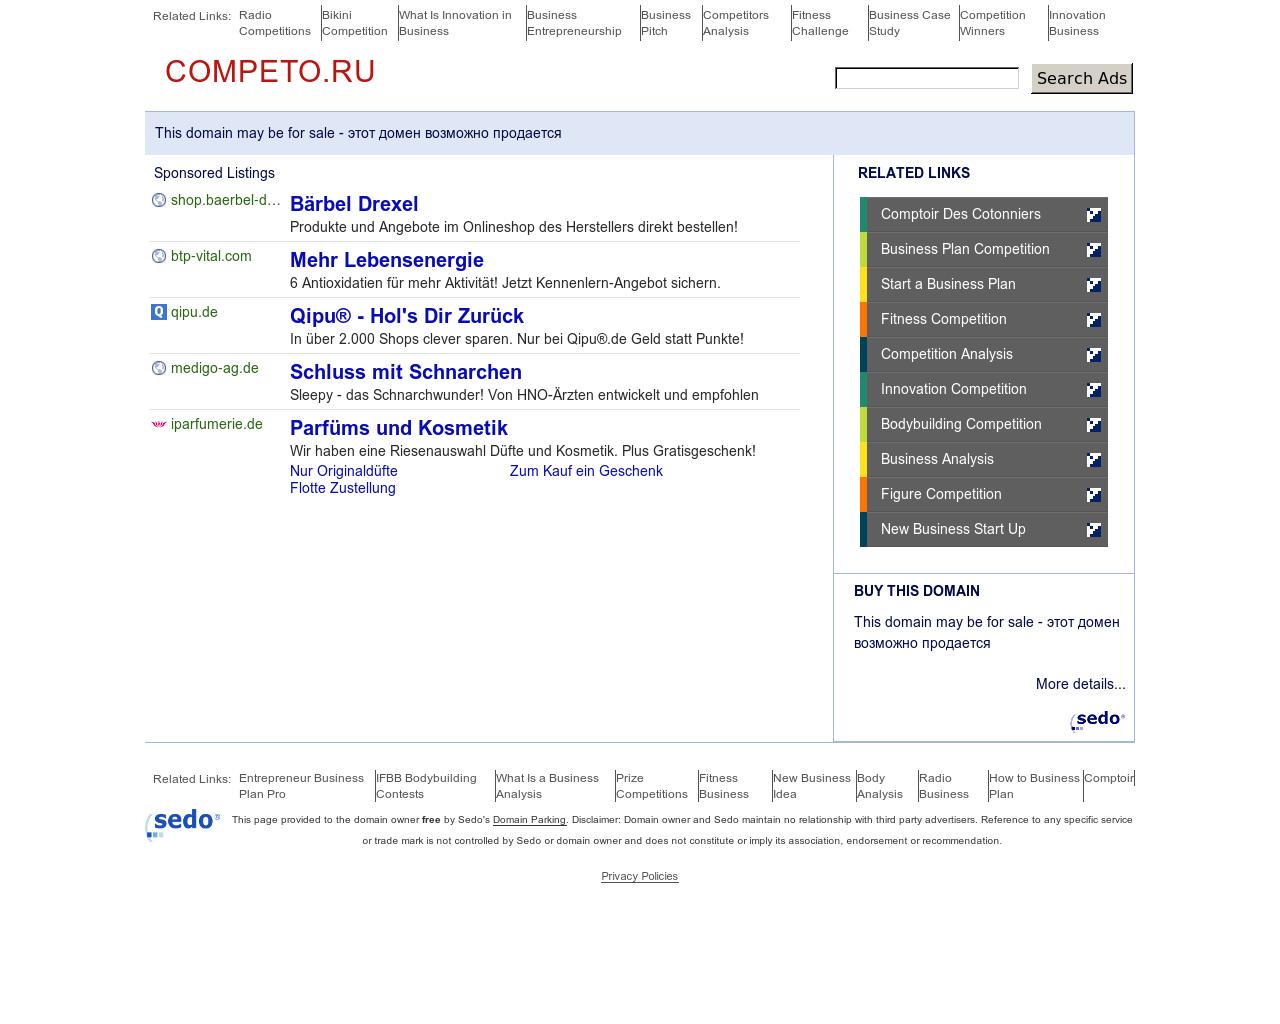 Изображение сайта competo.ru в разрешении 1280x1024